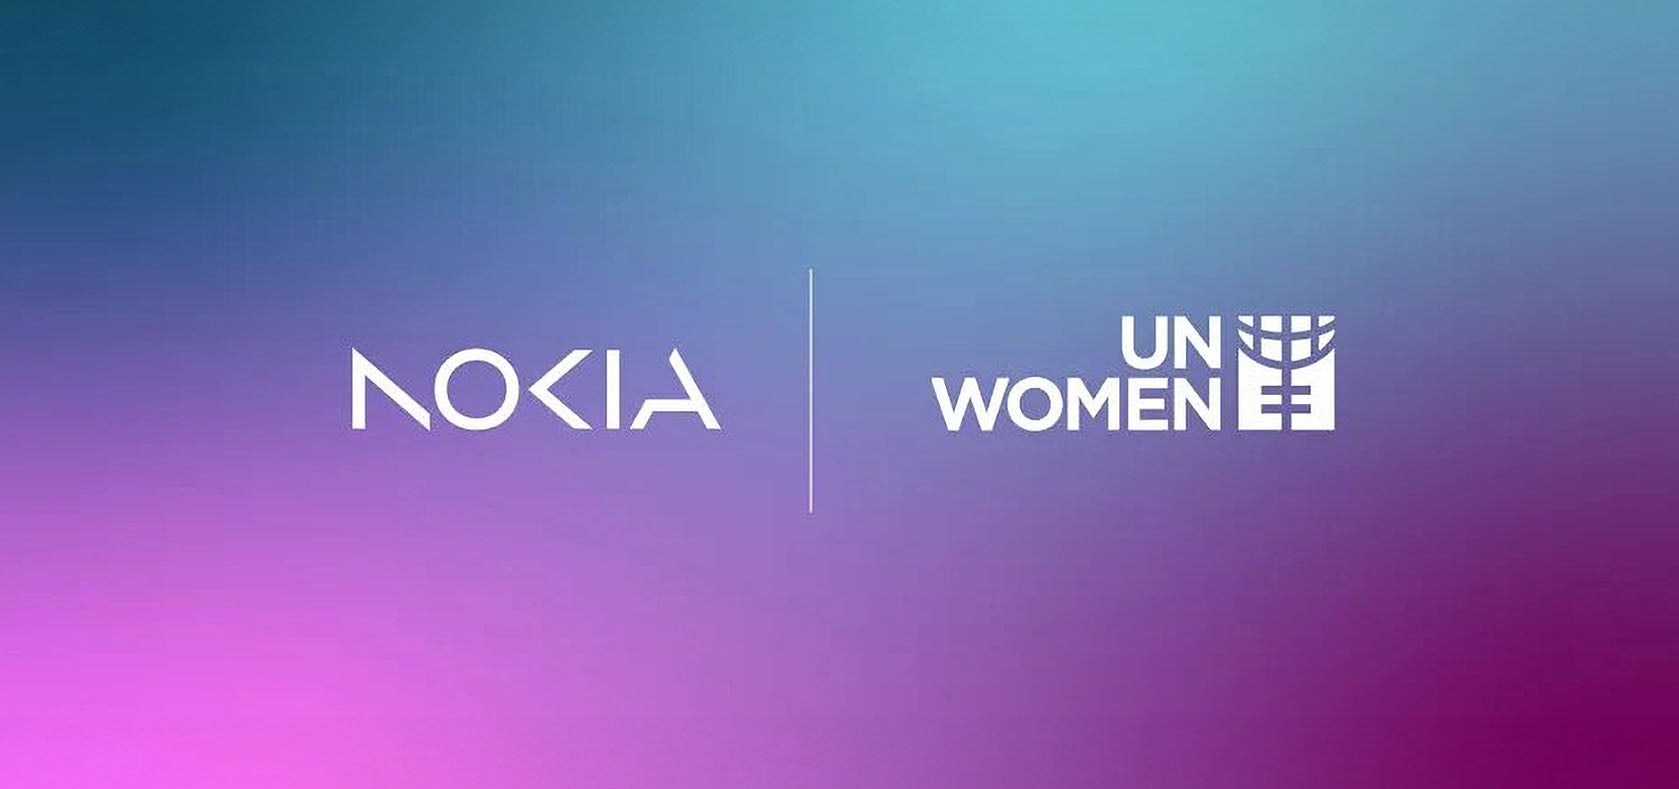 Nokia x UN Women